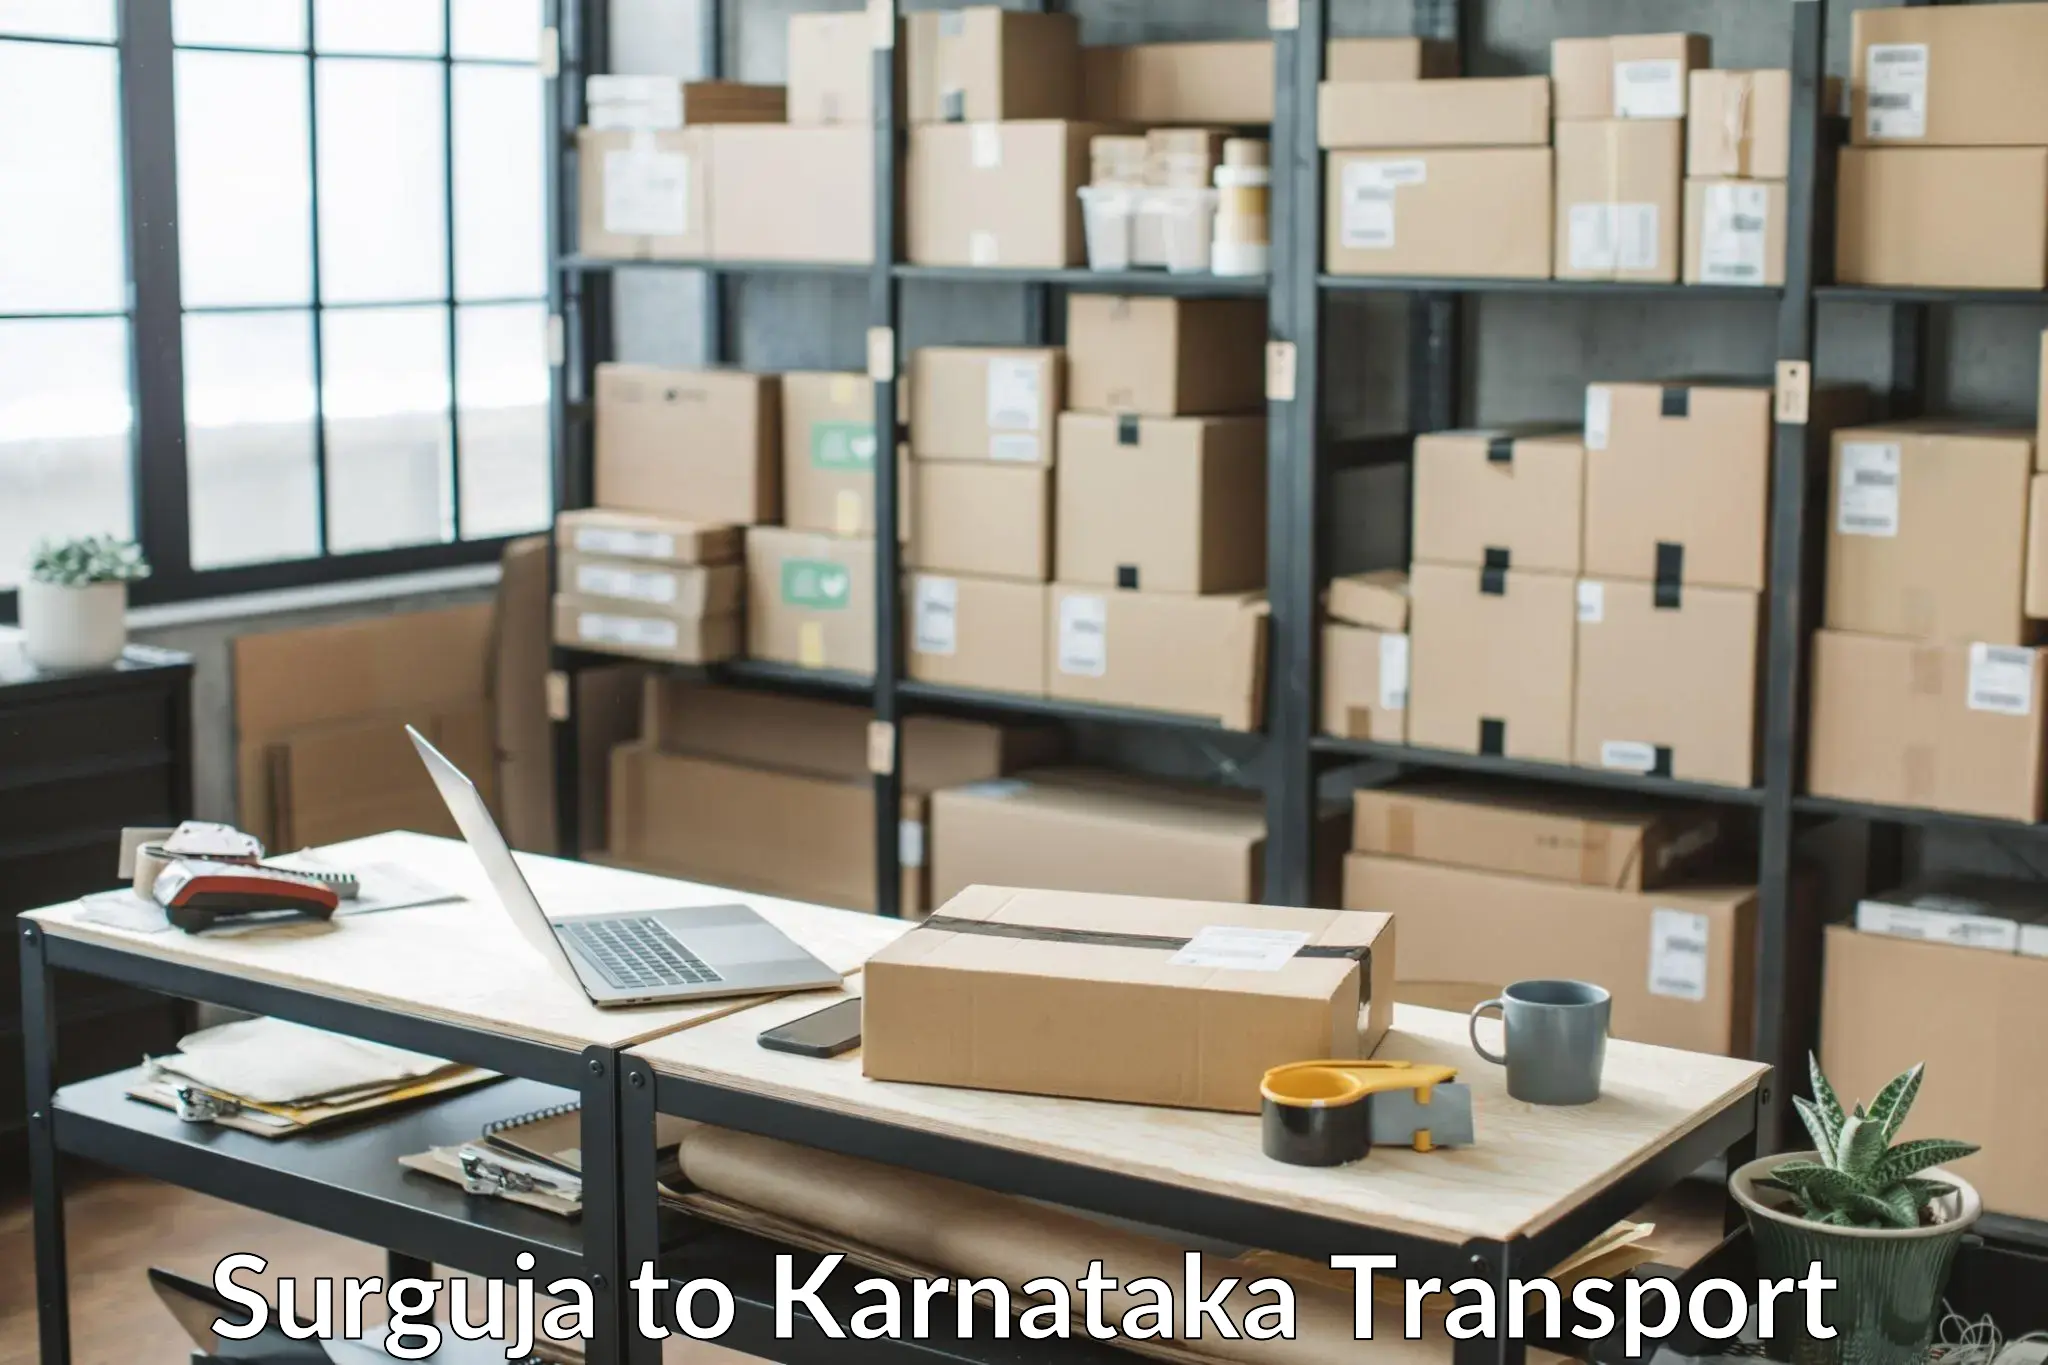 Truck transport companies in India Surguja to Kolar